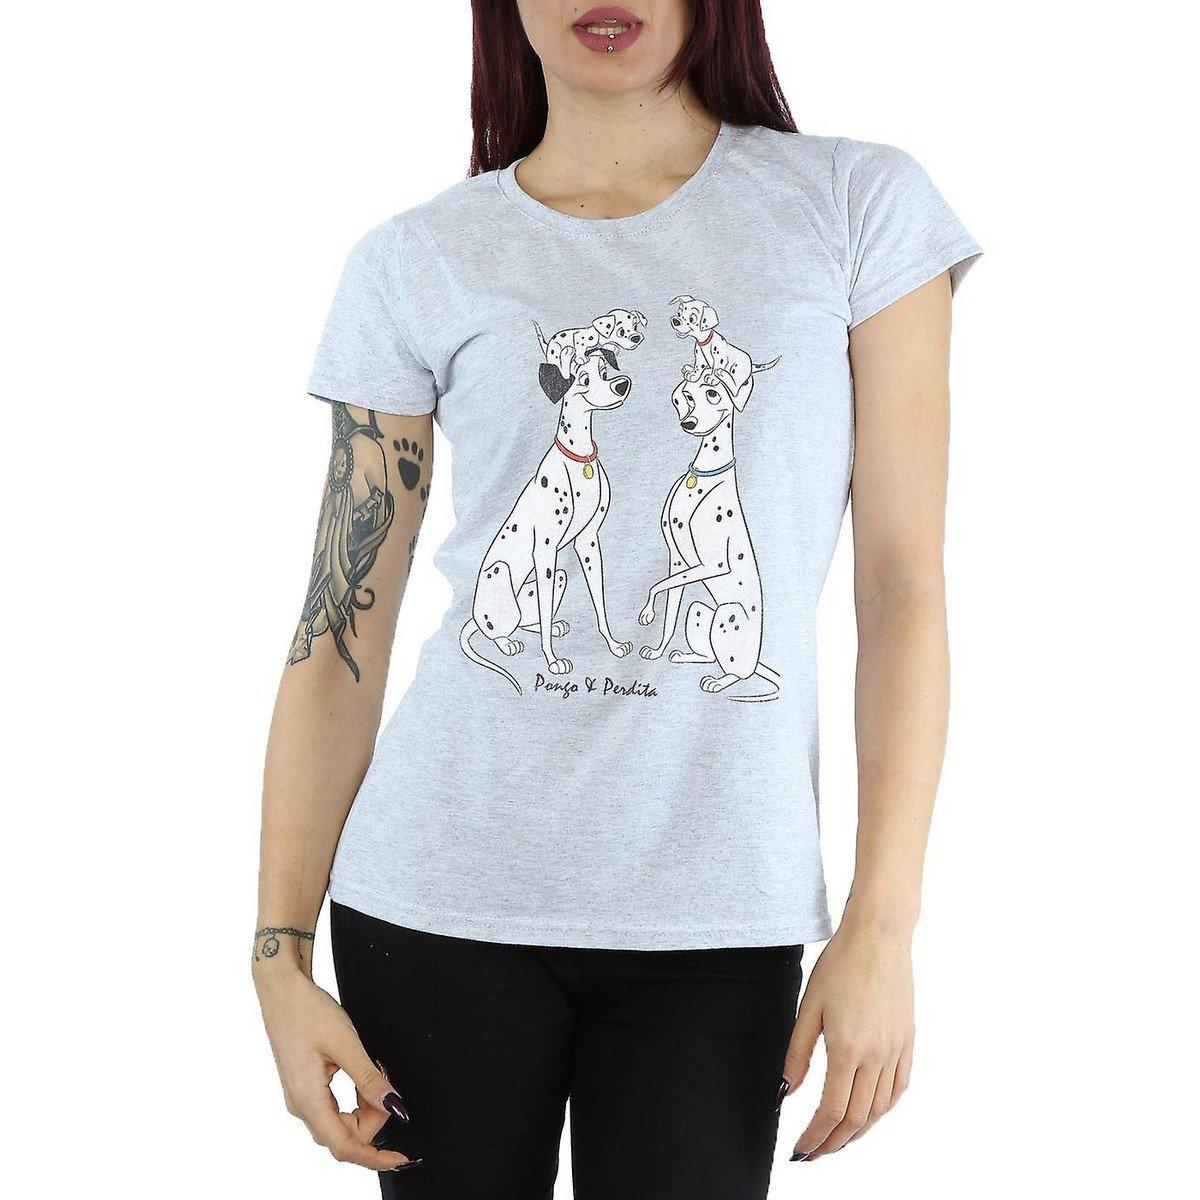 101 Dalmatians Tshirt Pongo And Perdita Femme Gris XL